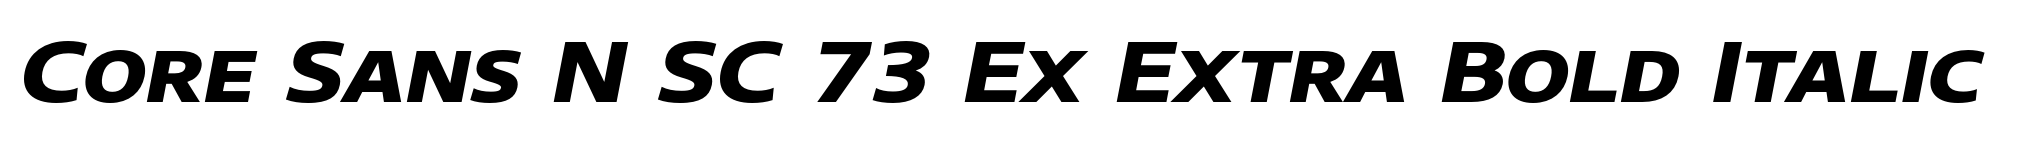 Core Sans N SC 73 Ex Extra Bold Italic image